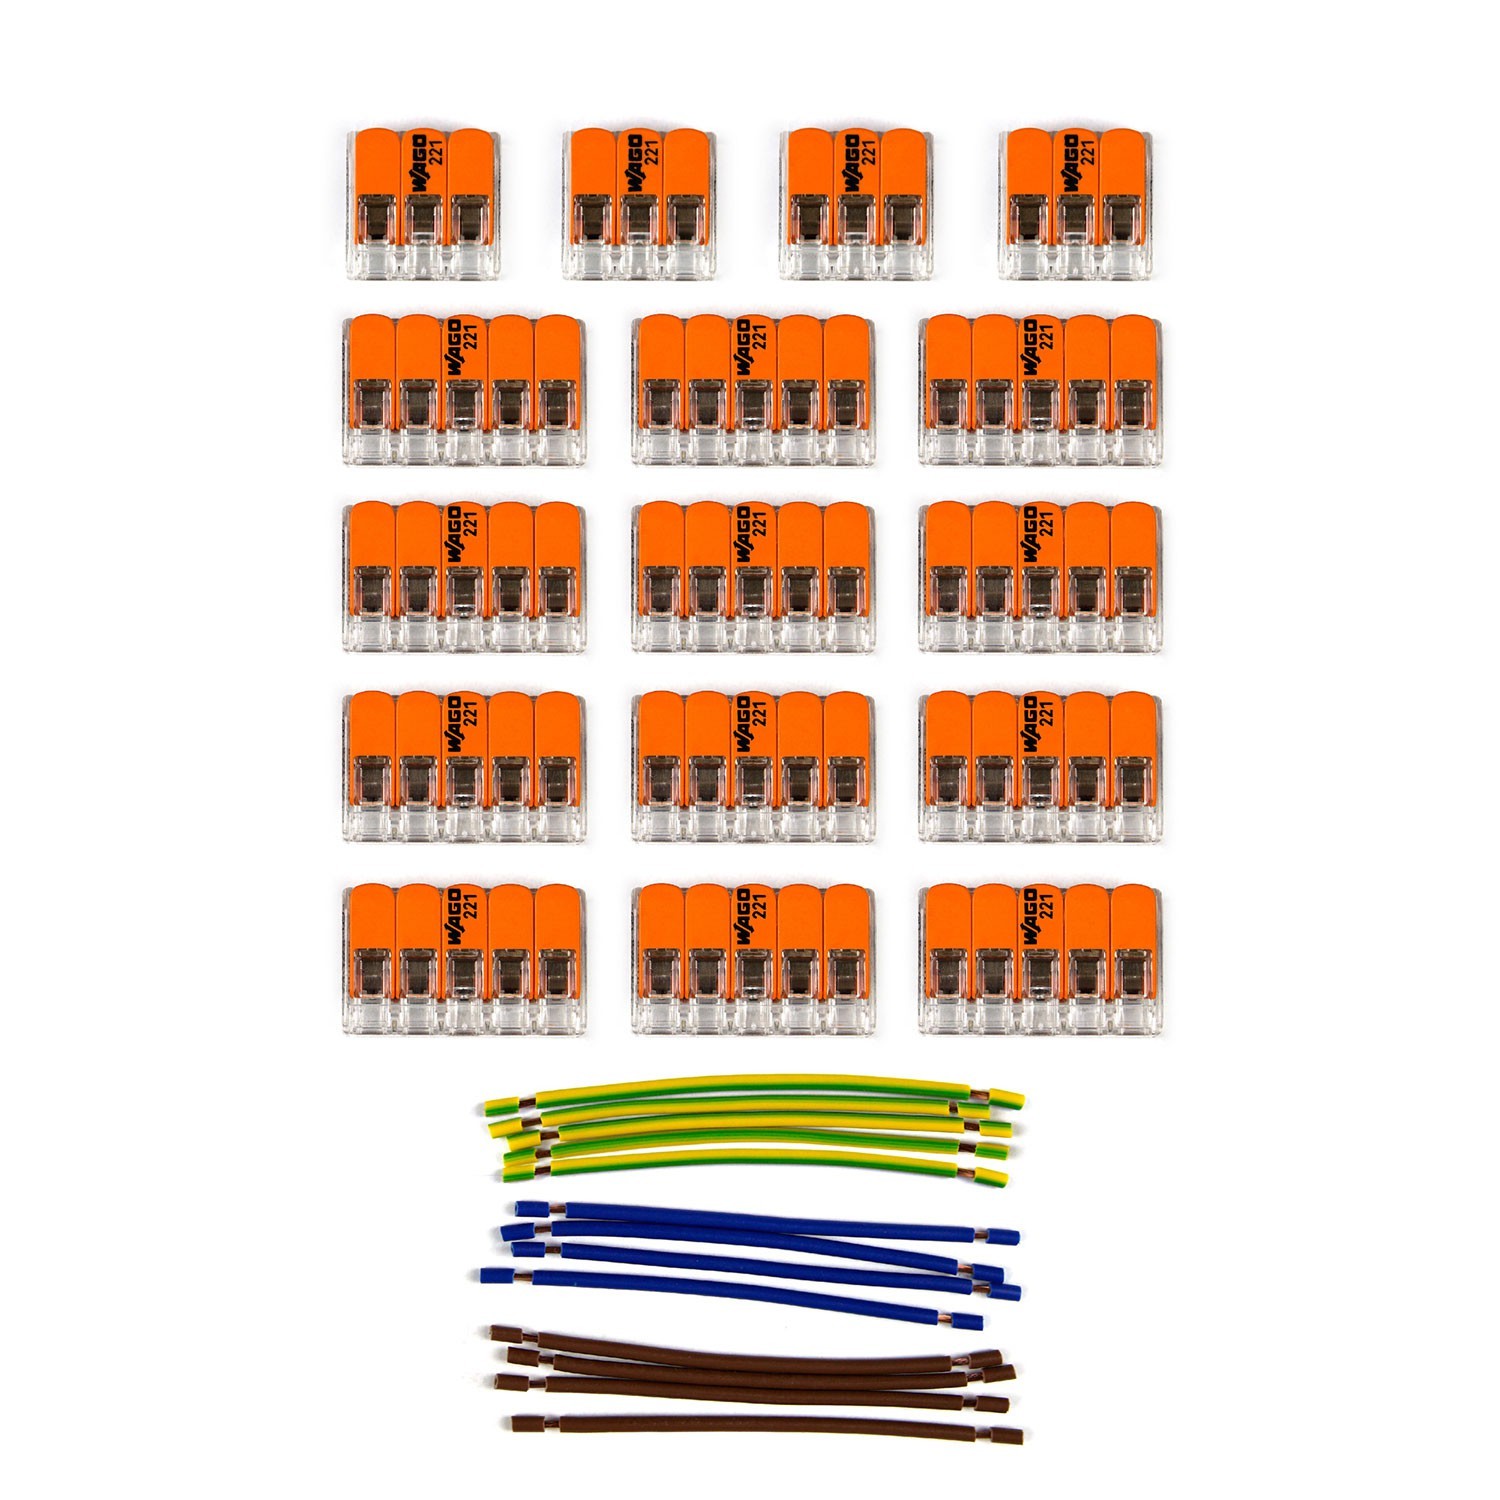 Kit de conectores WAGO compatible con cable con polo a tierra para escudo de techo de catorce orificios